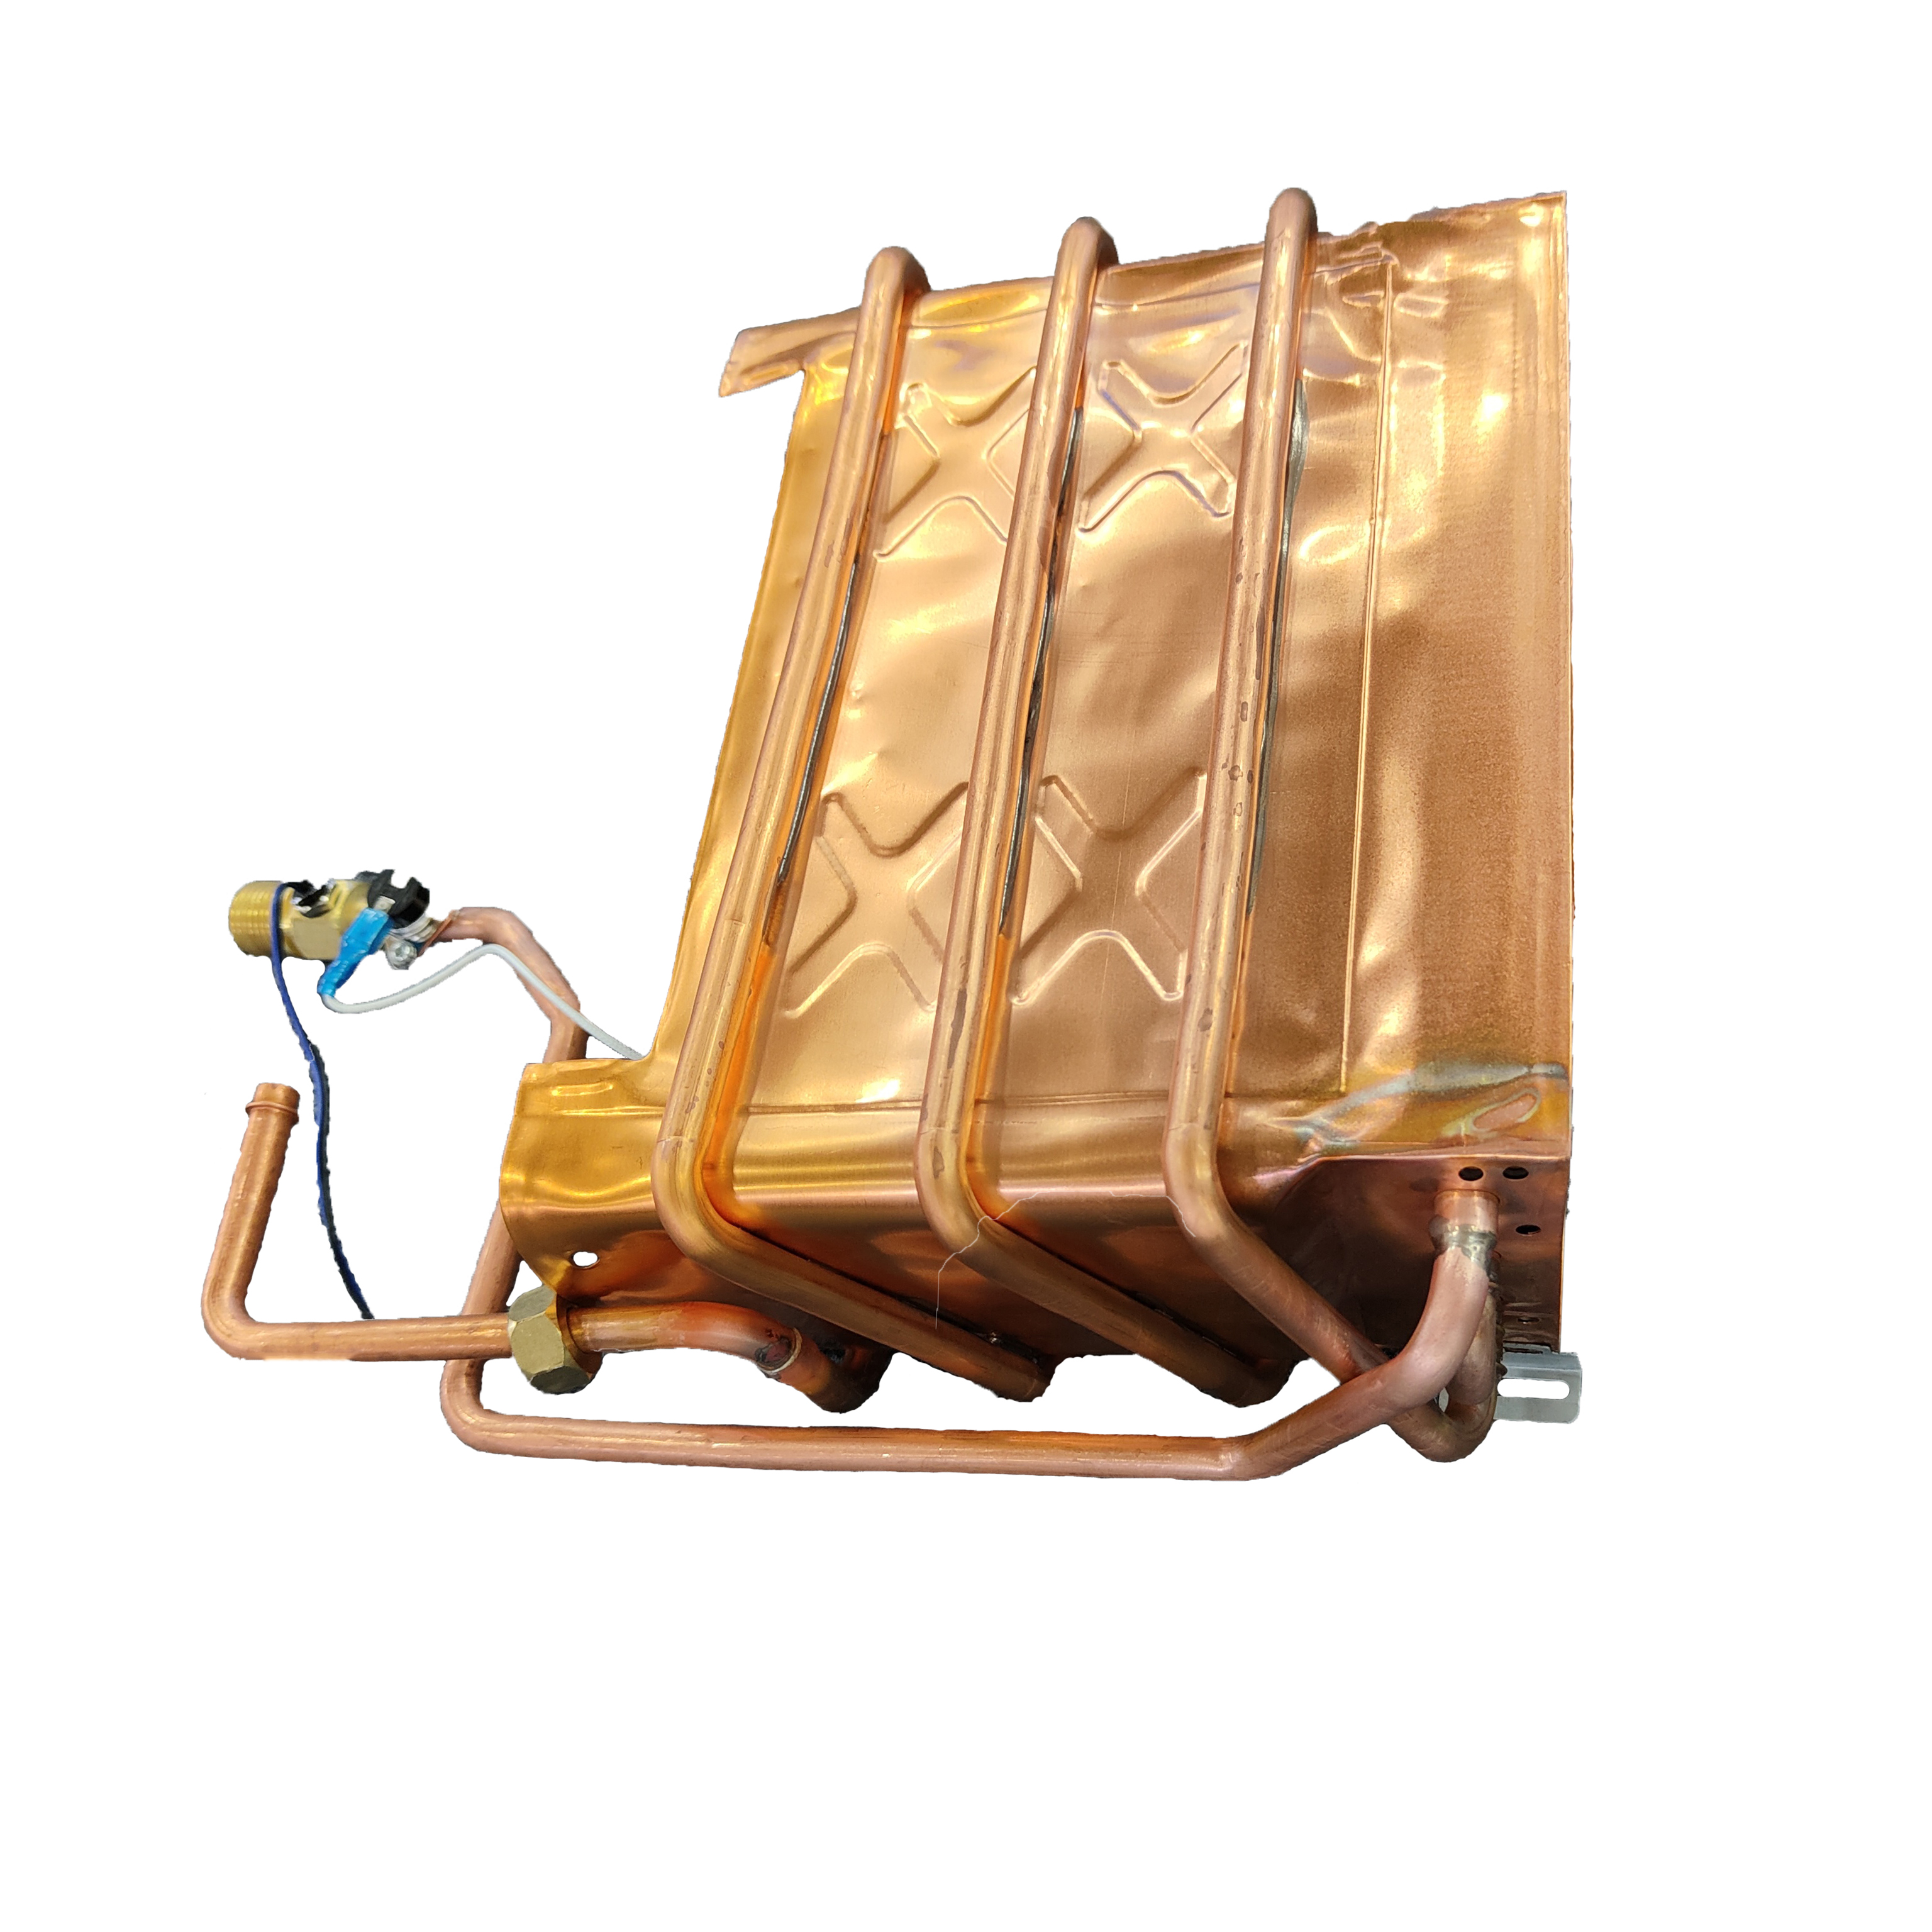 https://www.zsvangood.com/oxygen-free-copper-heat-exchanger-for-gas-water-heater-product/